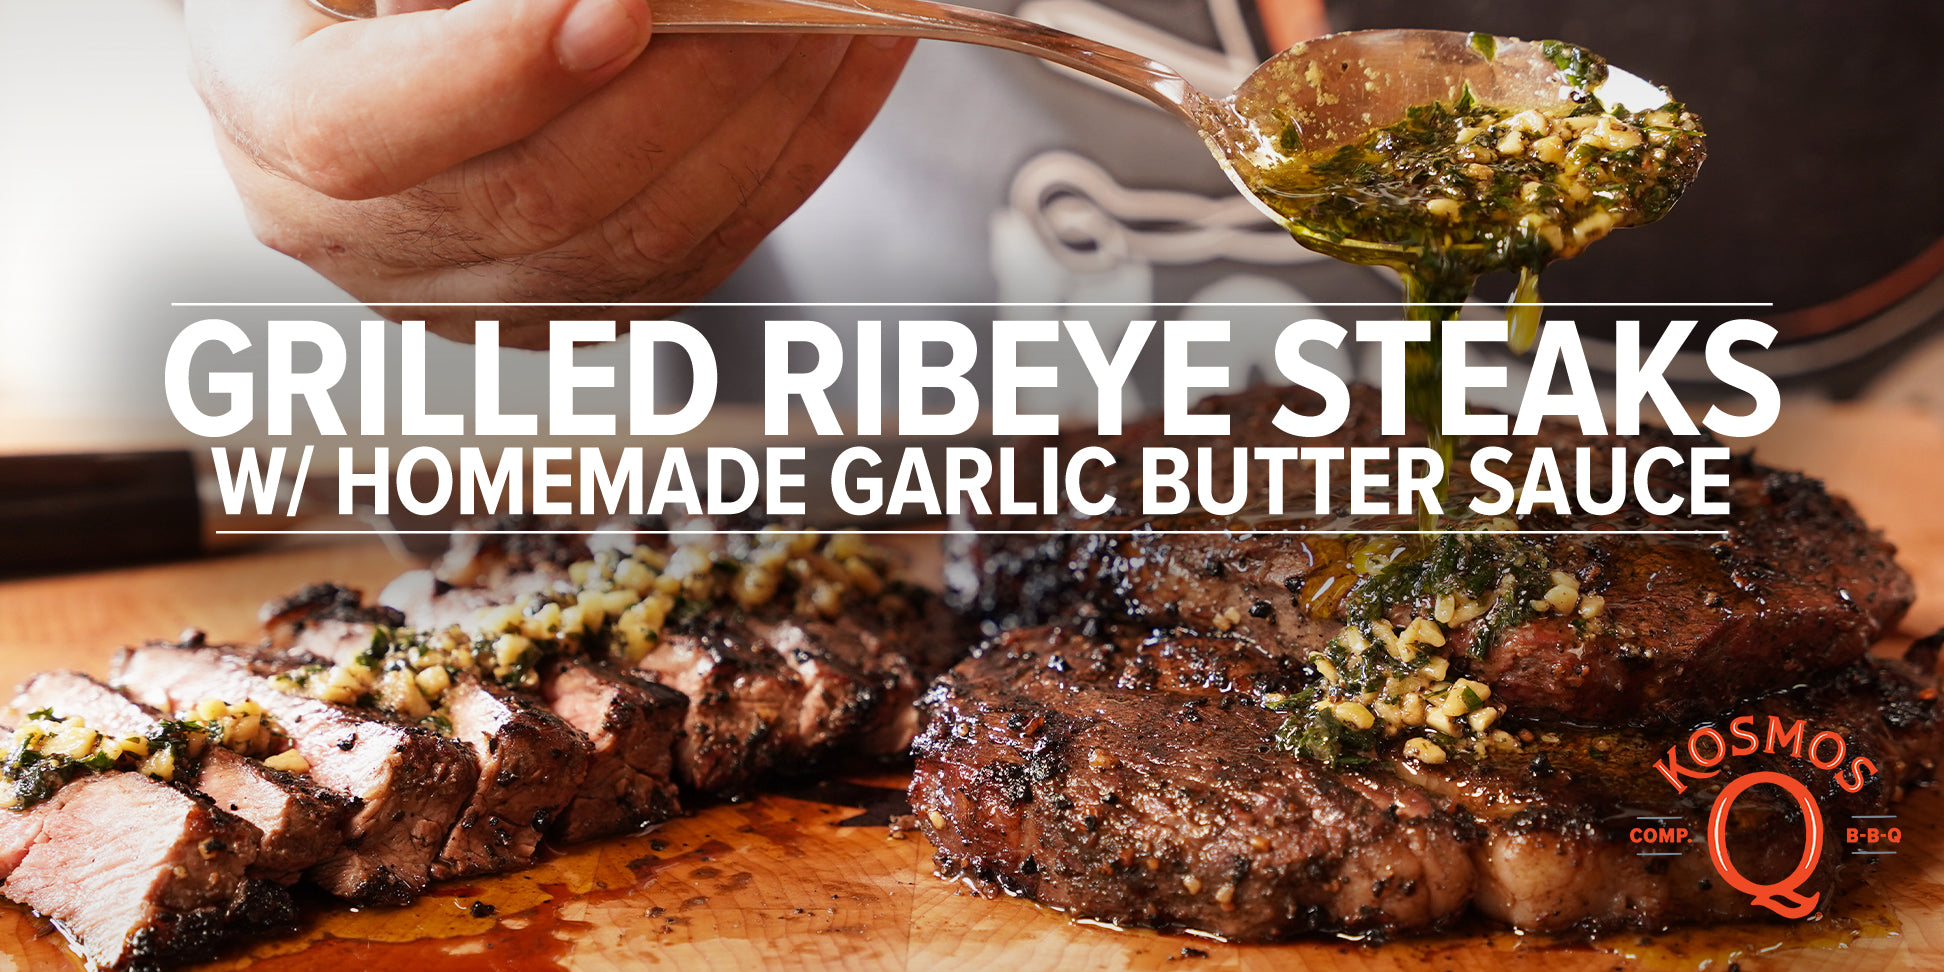 Ribeye Steaks with Homemade Garlic Butter Sauce